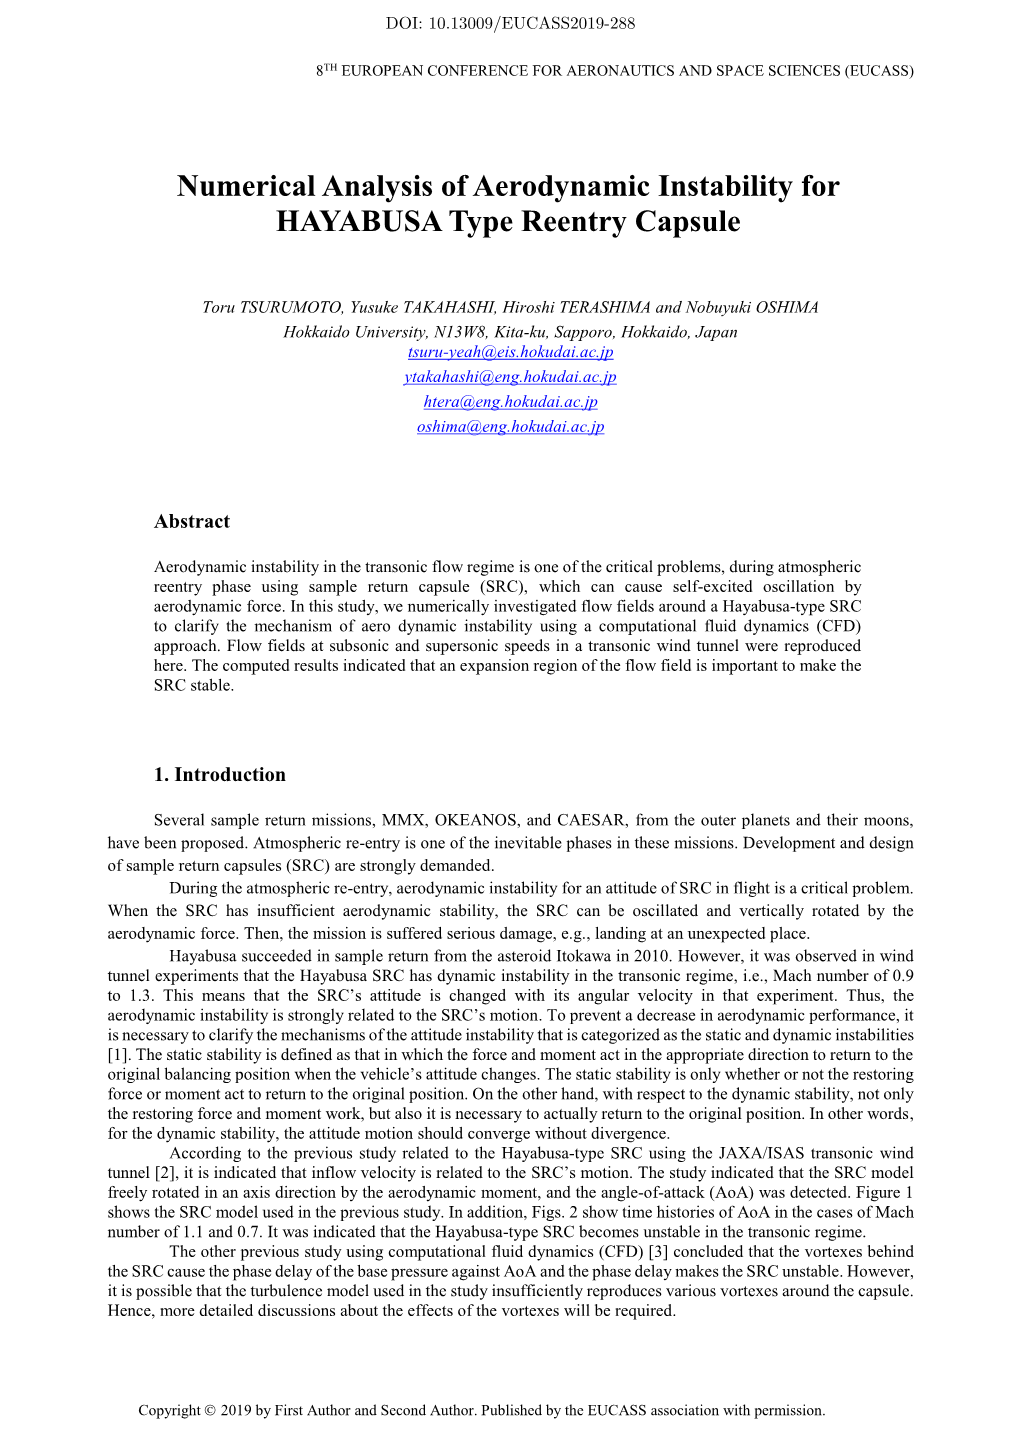 Numerical Analysis of Aerodynamic Instability for HAYABUSA Type Reentry Capsule